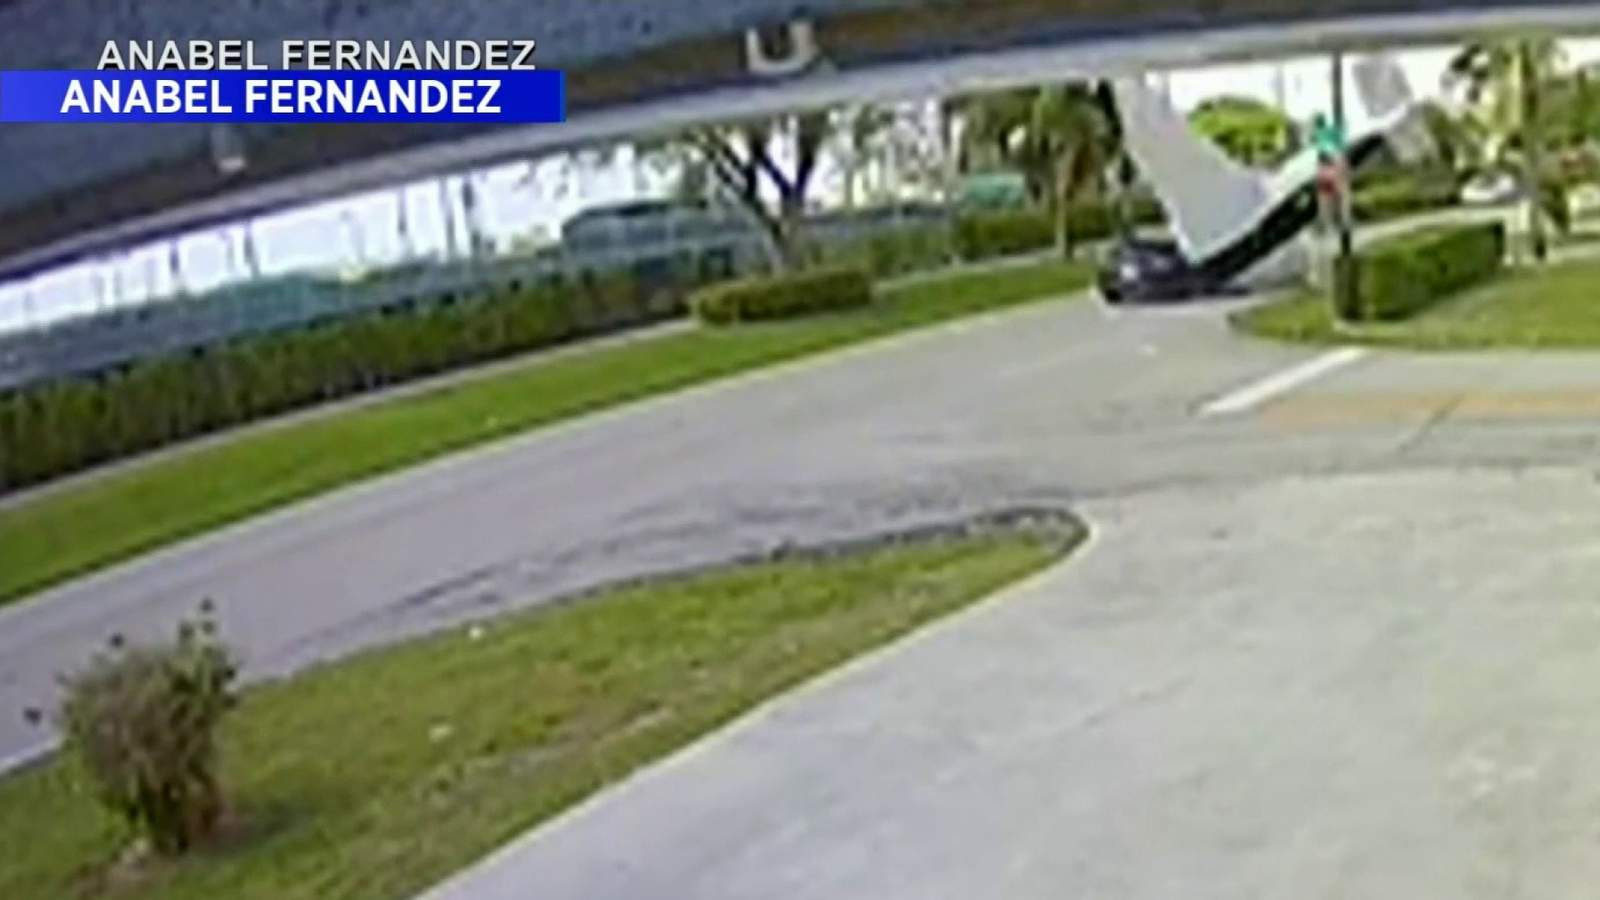 Ring doorbell video captures plane crashing into SUV in Florida neighborhood, killing 3